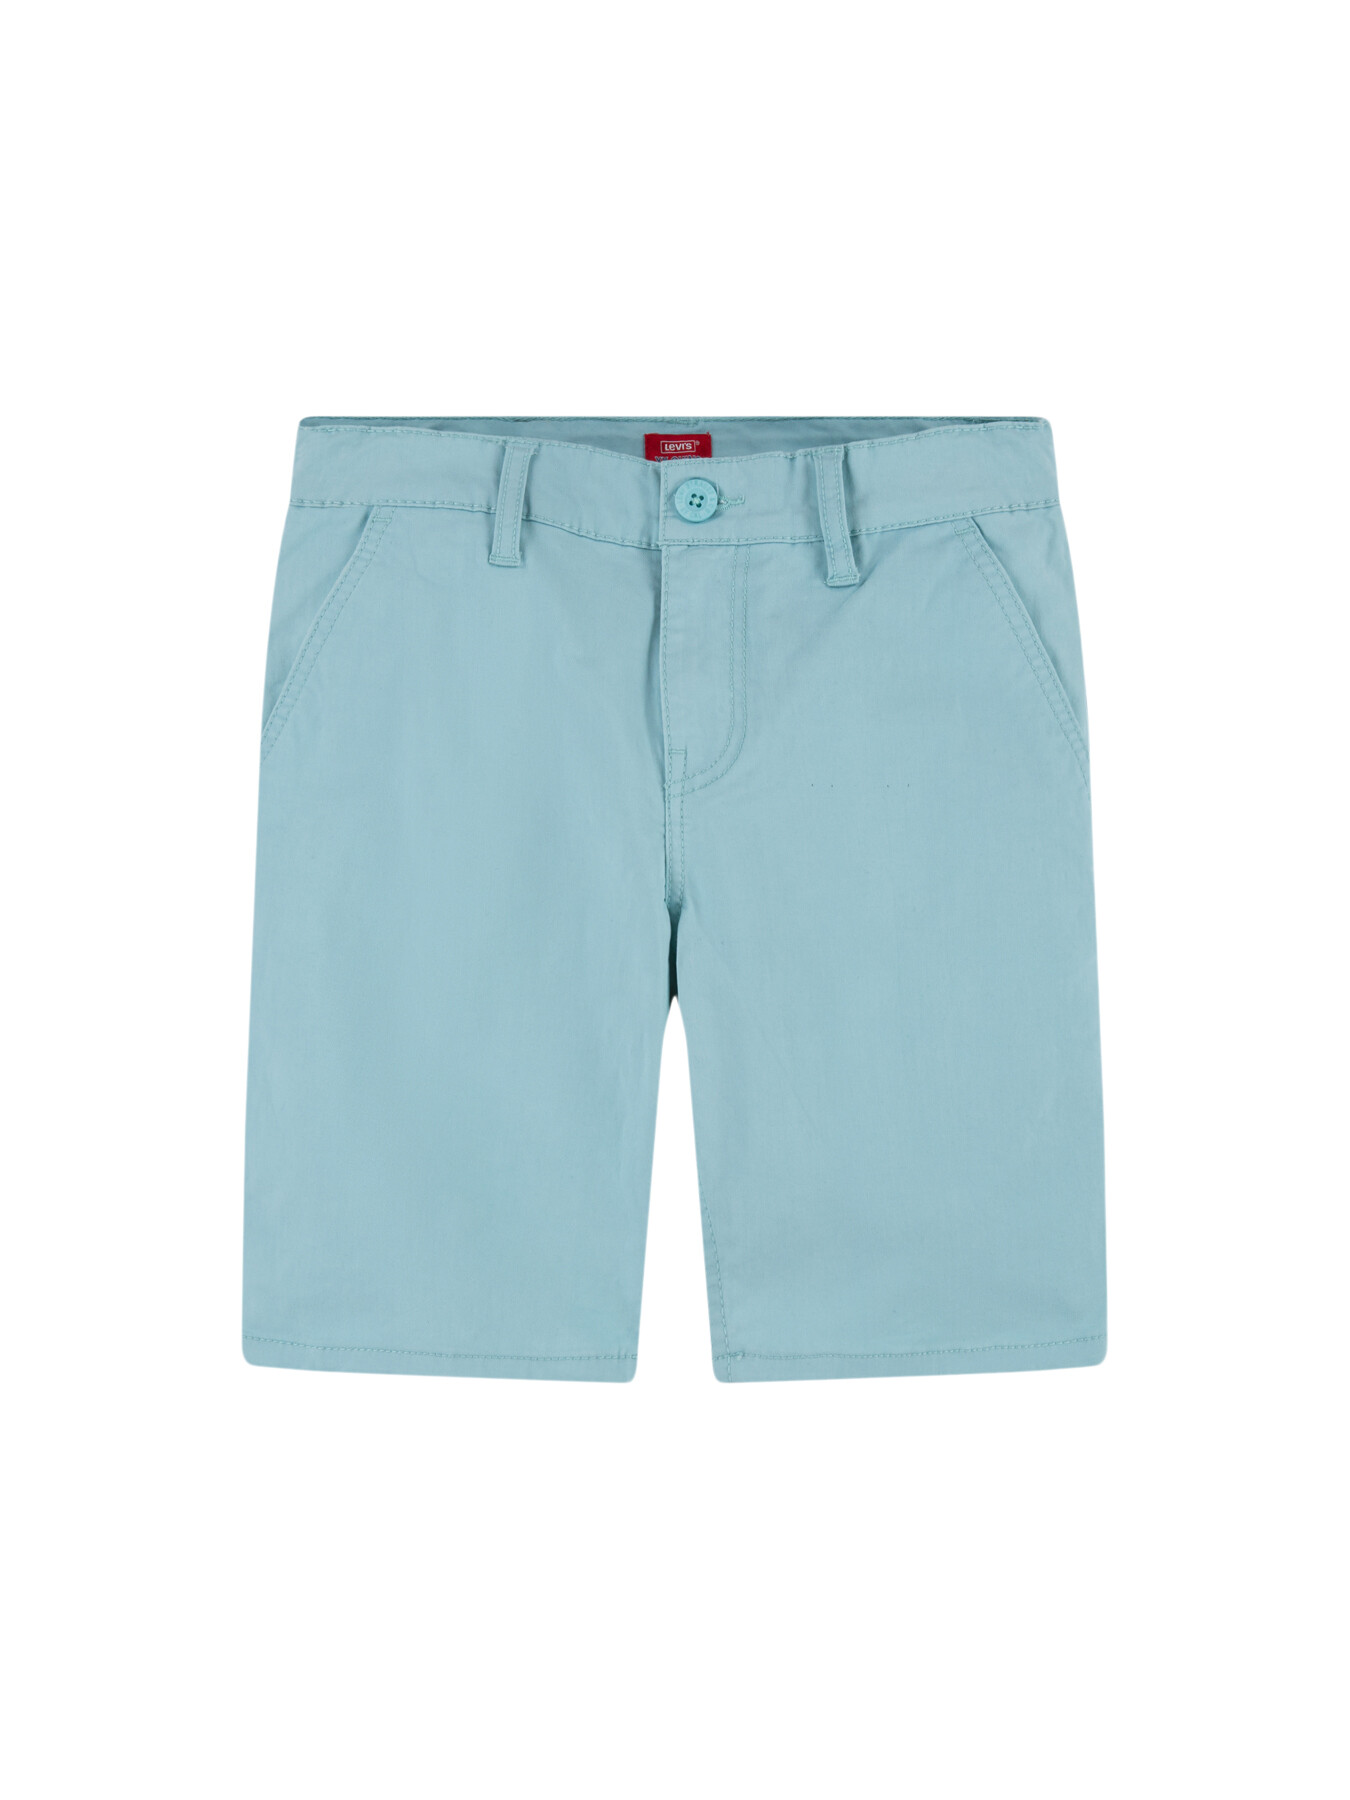 Levi's Straight Chino Shorts | Trousers & Shorts | Fenwick